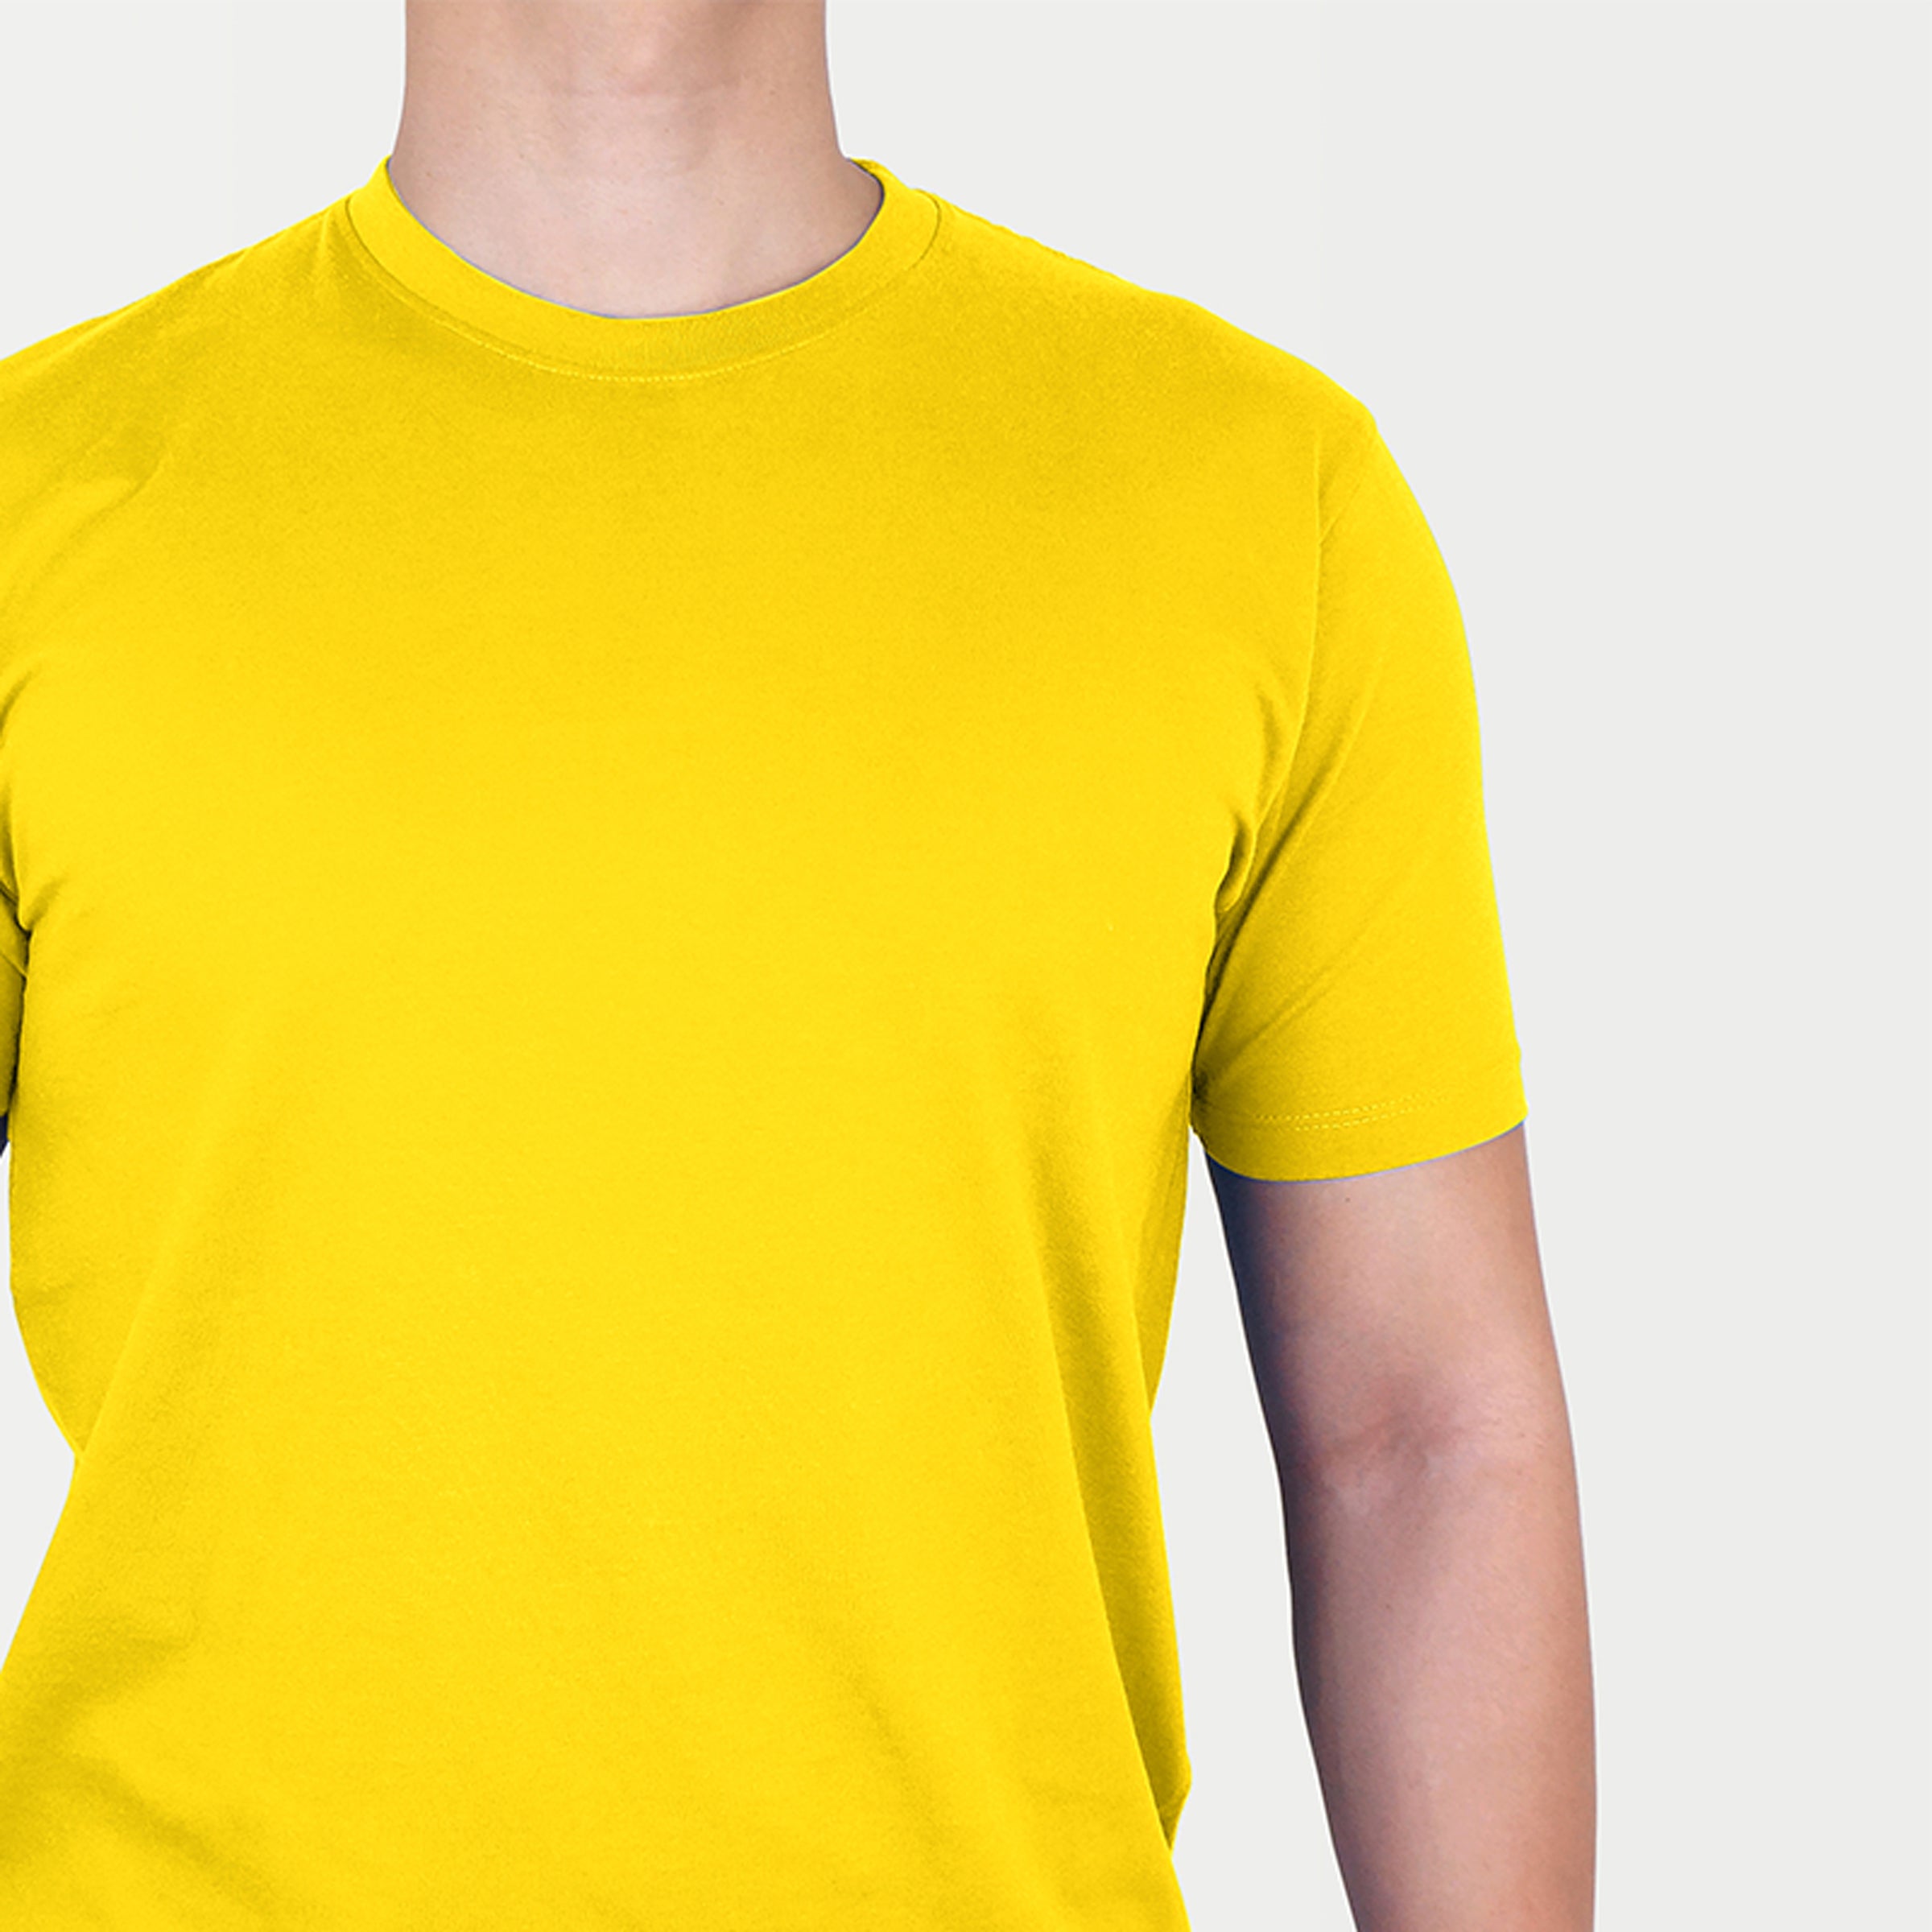 indigo yellow t-shirt plain right side